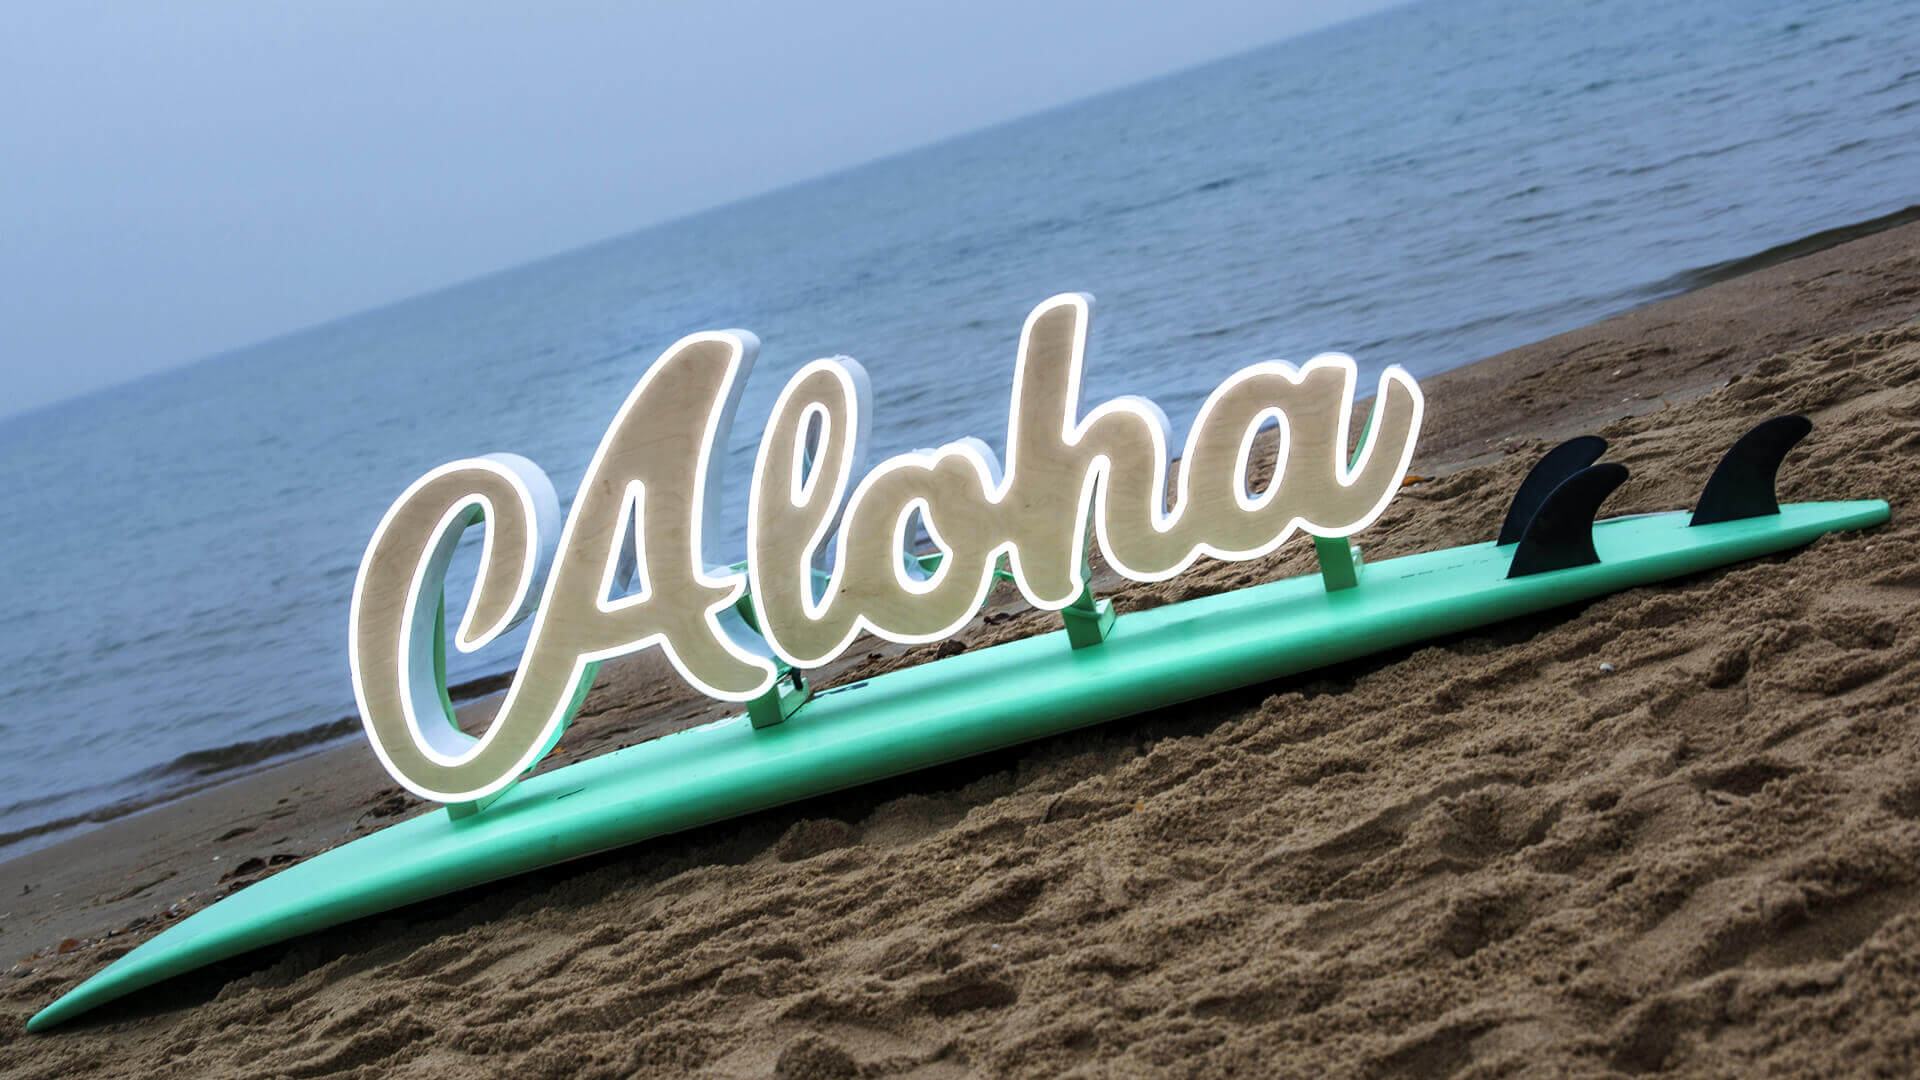 Aloha - Aloha - Kontur leuchtender LED-Schriftzug